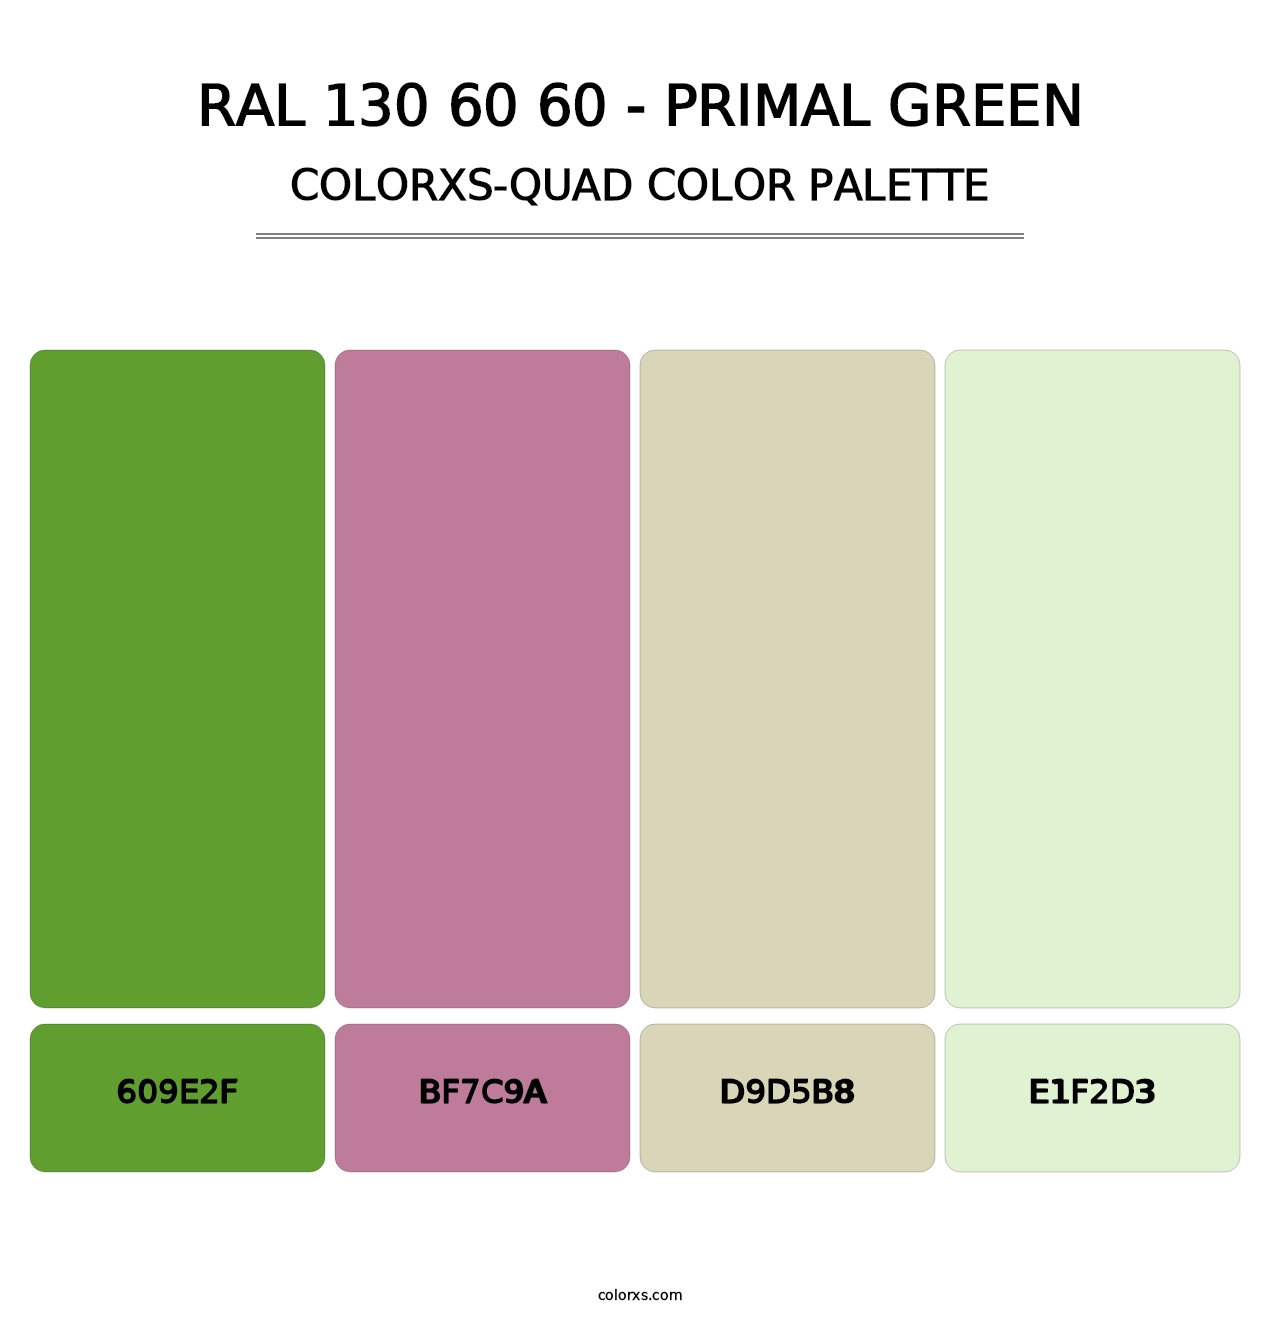 RAL 130 60 60 - Primal Green - Colorxs Quad Palette